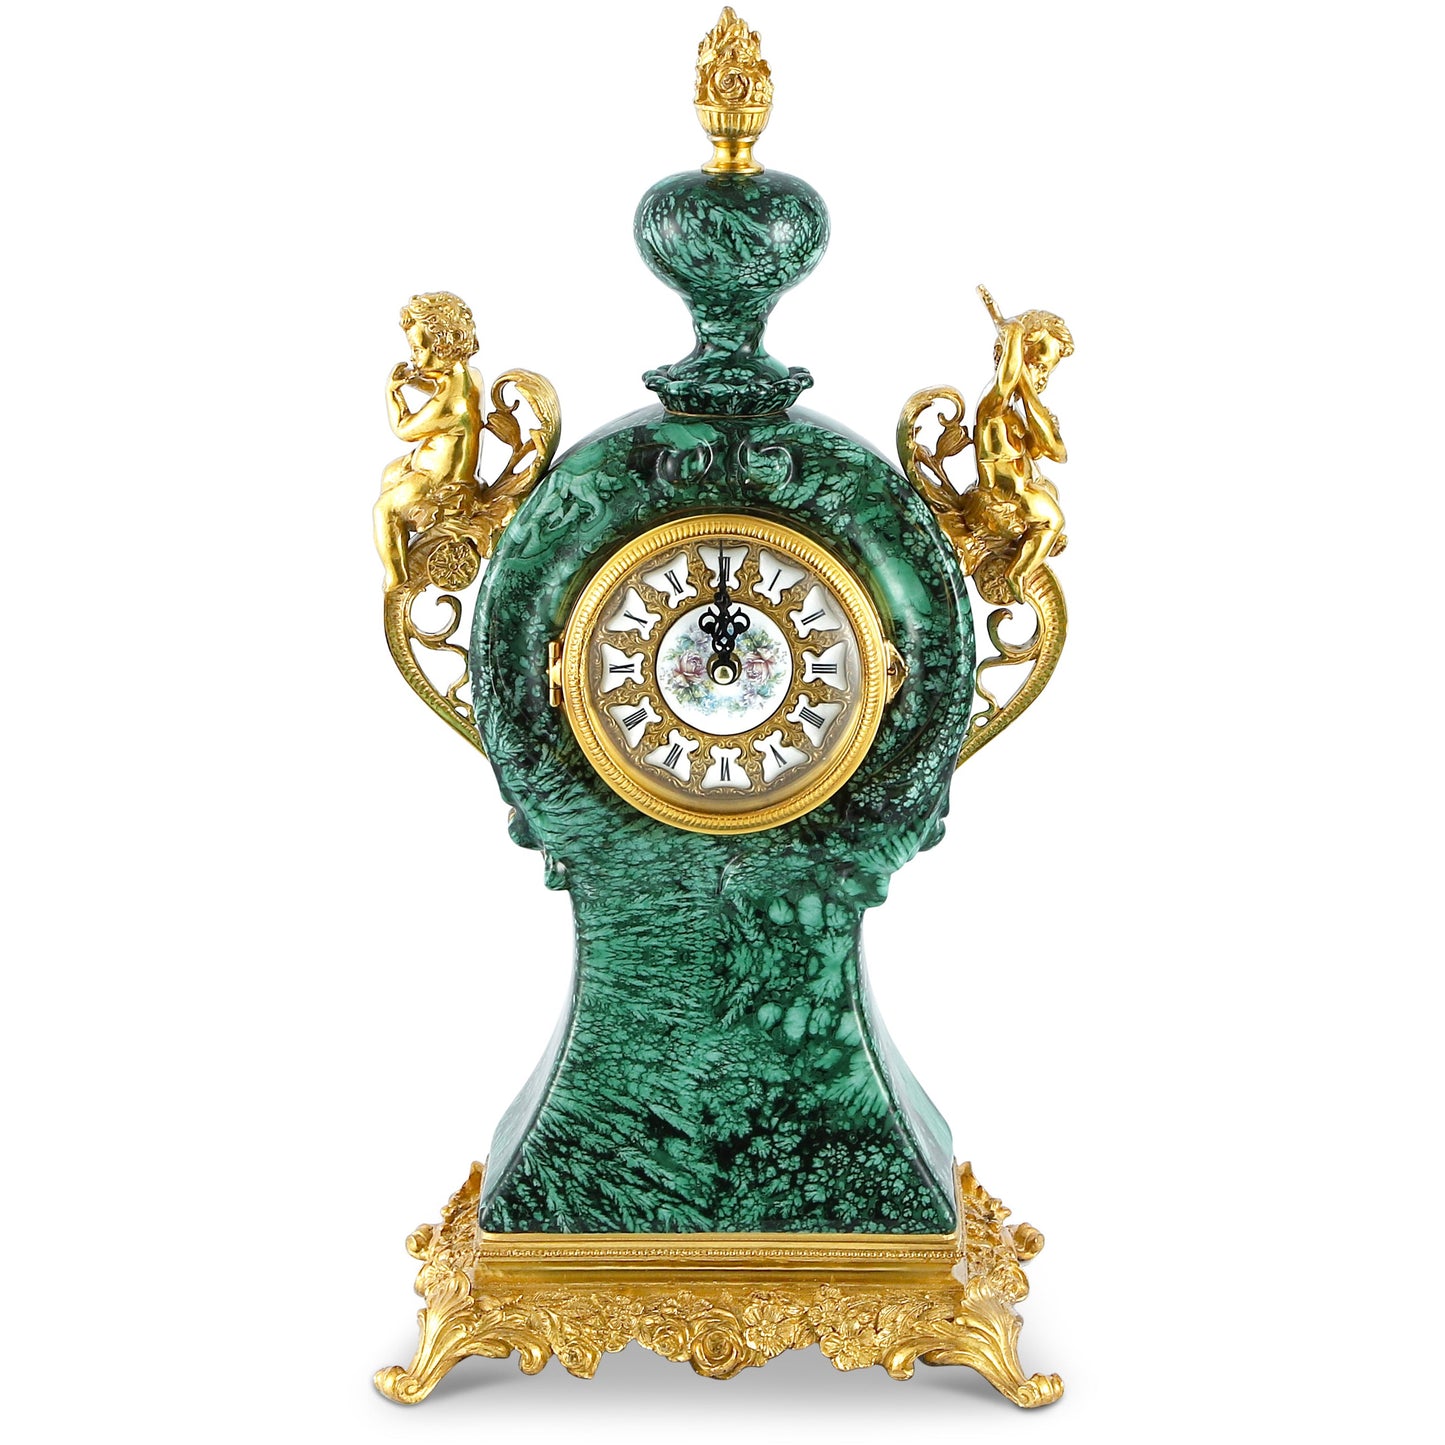 DECOELEVEN ™ Clock in Classic Green